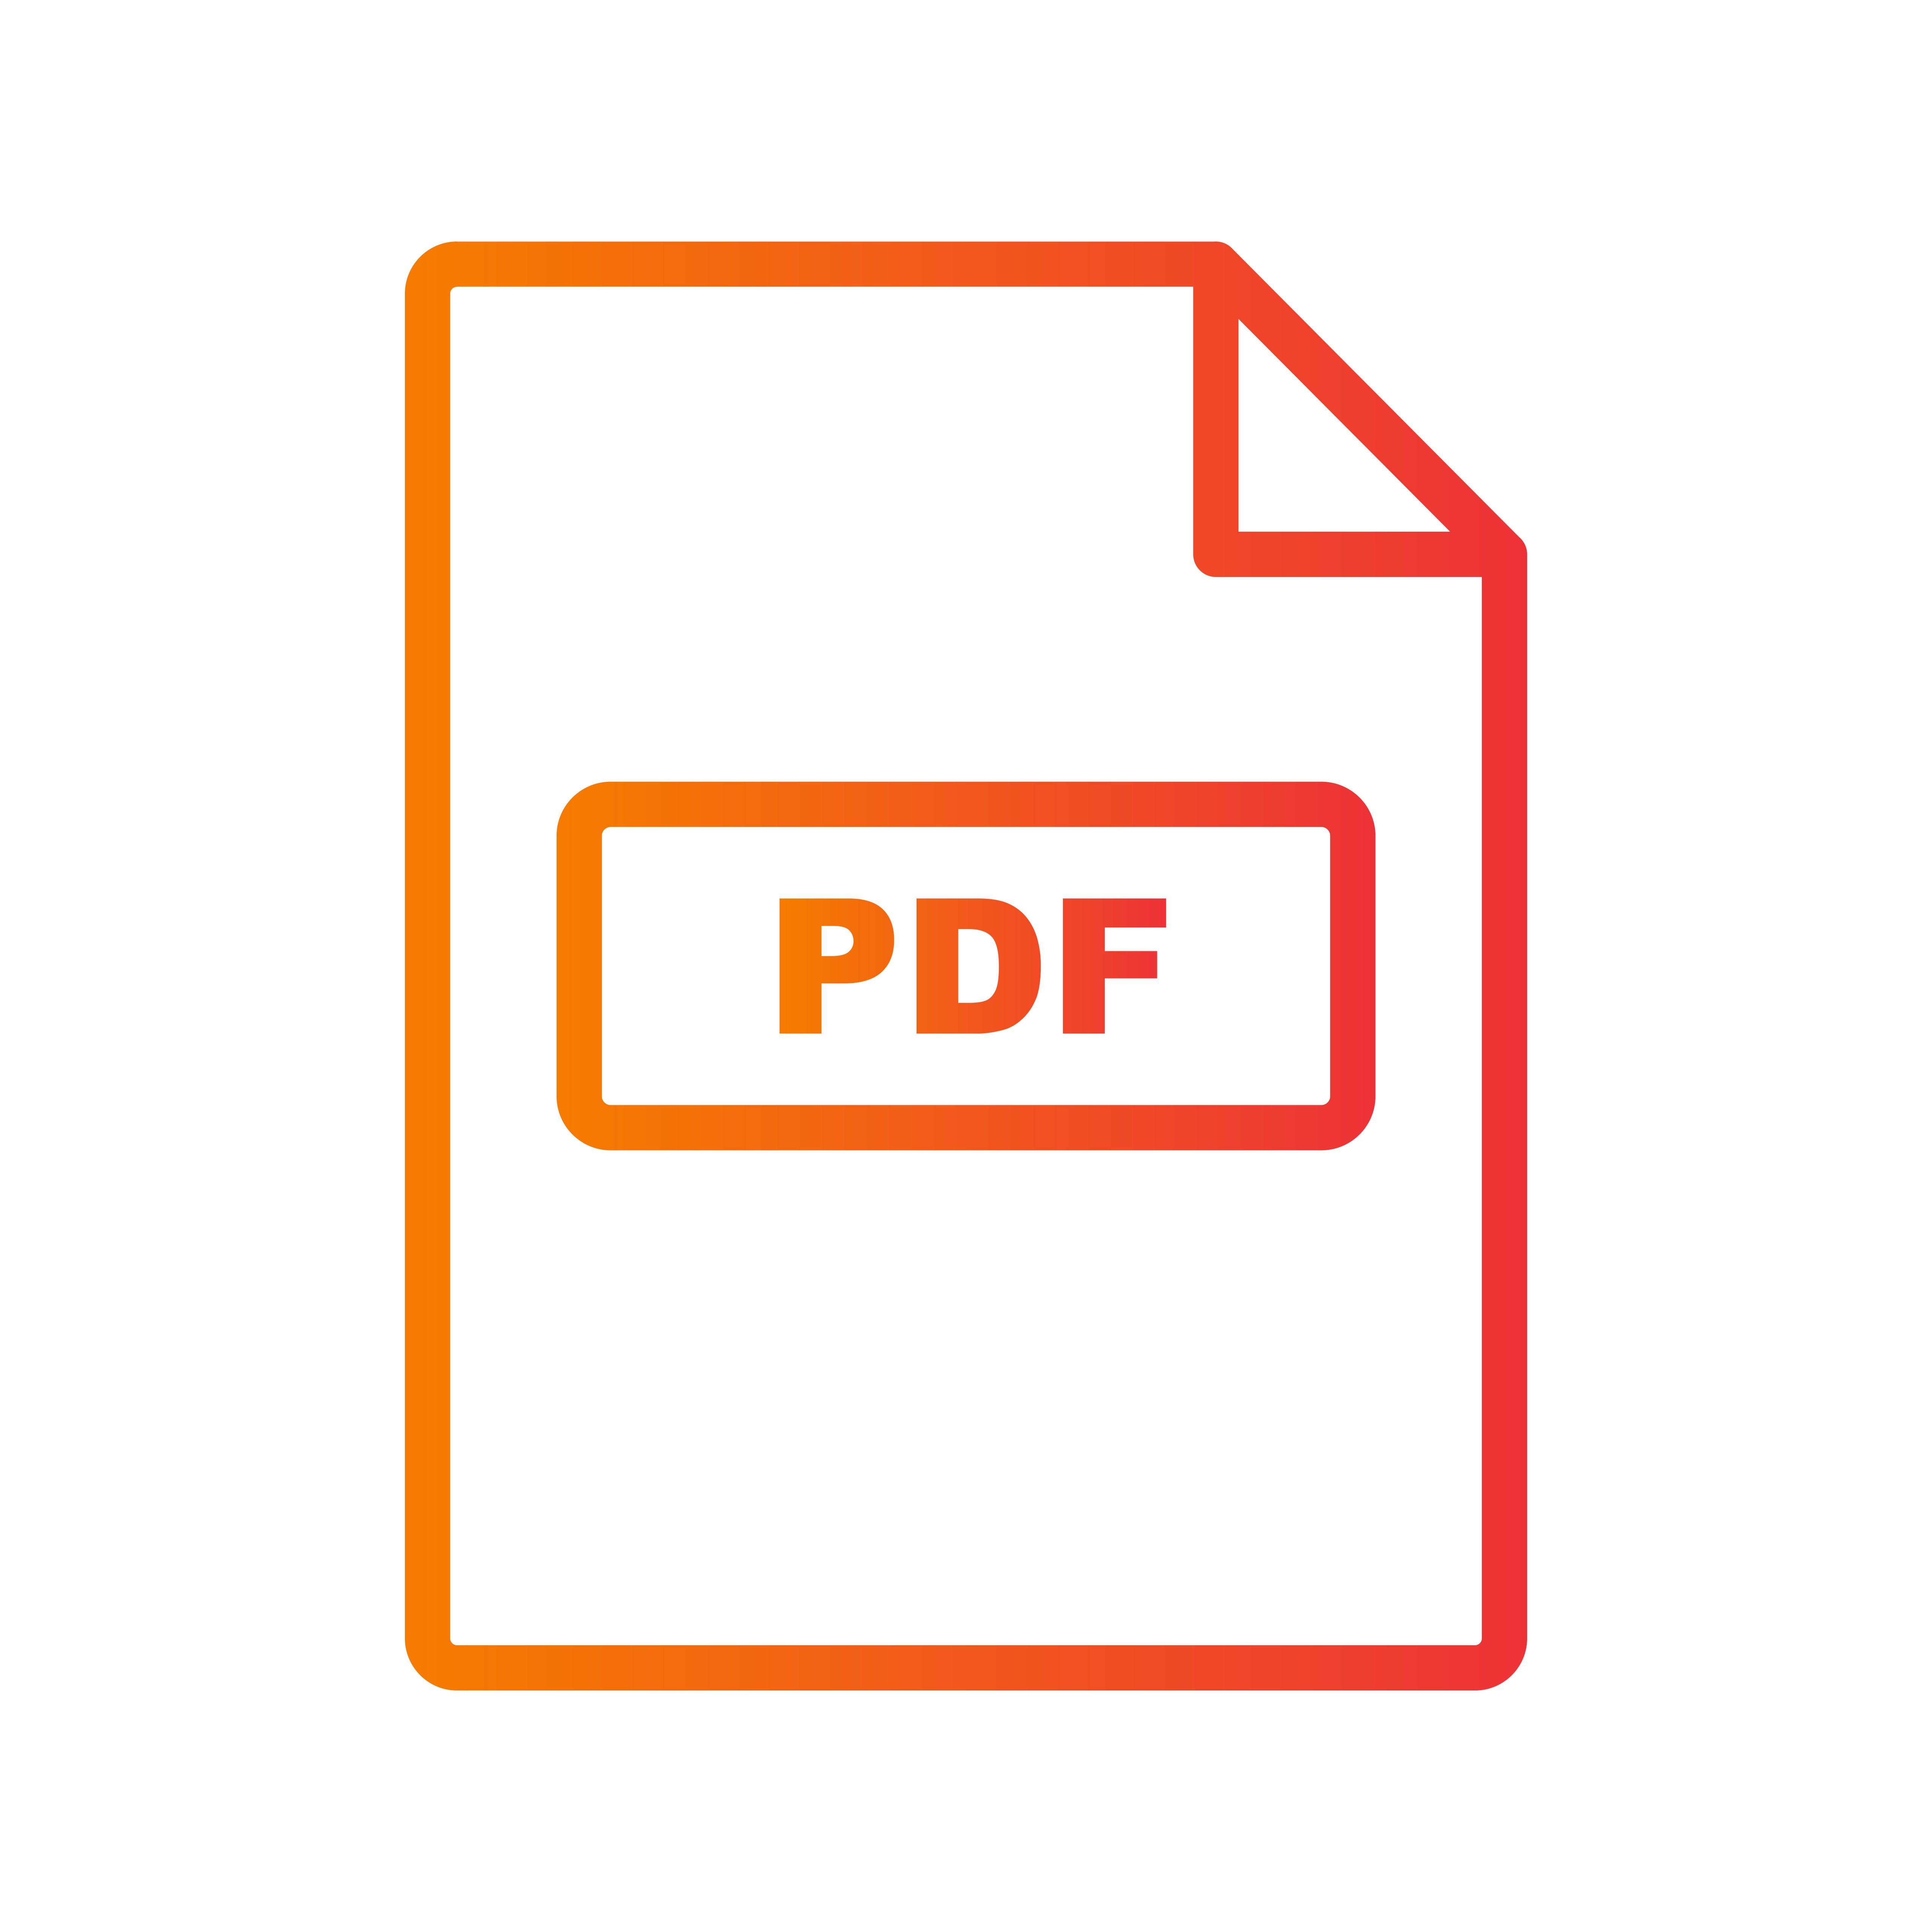 PDF Vector Icon - Download Free Vectors, Clipart Graphics ...